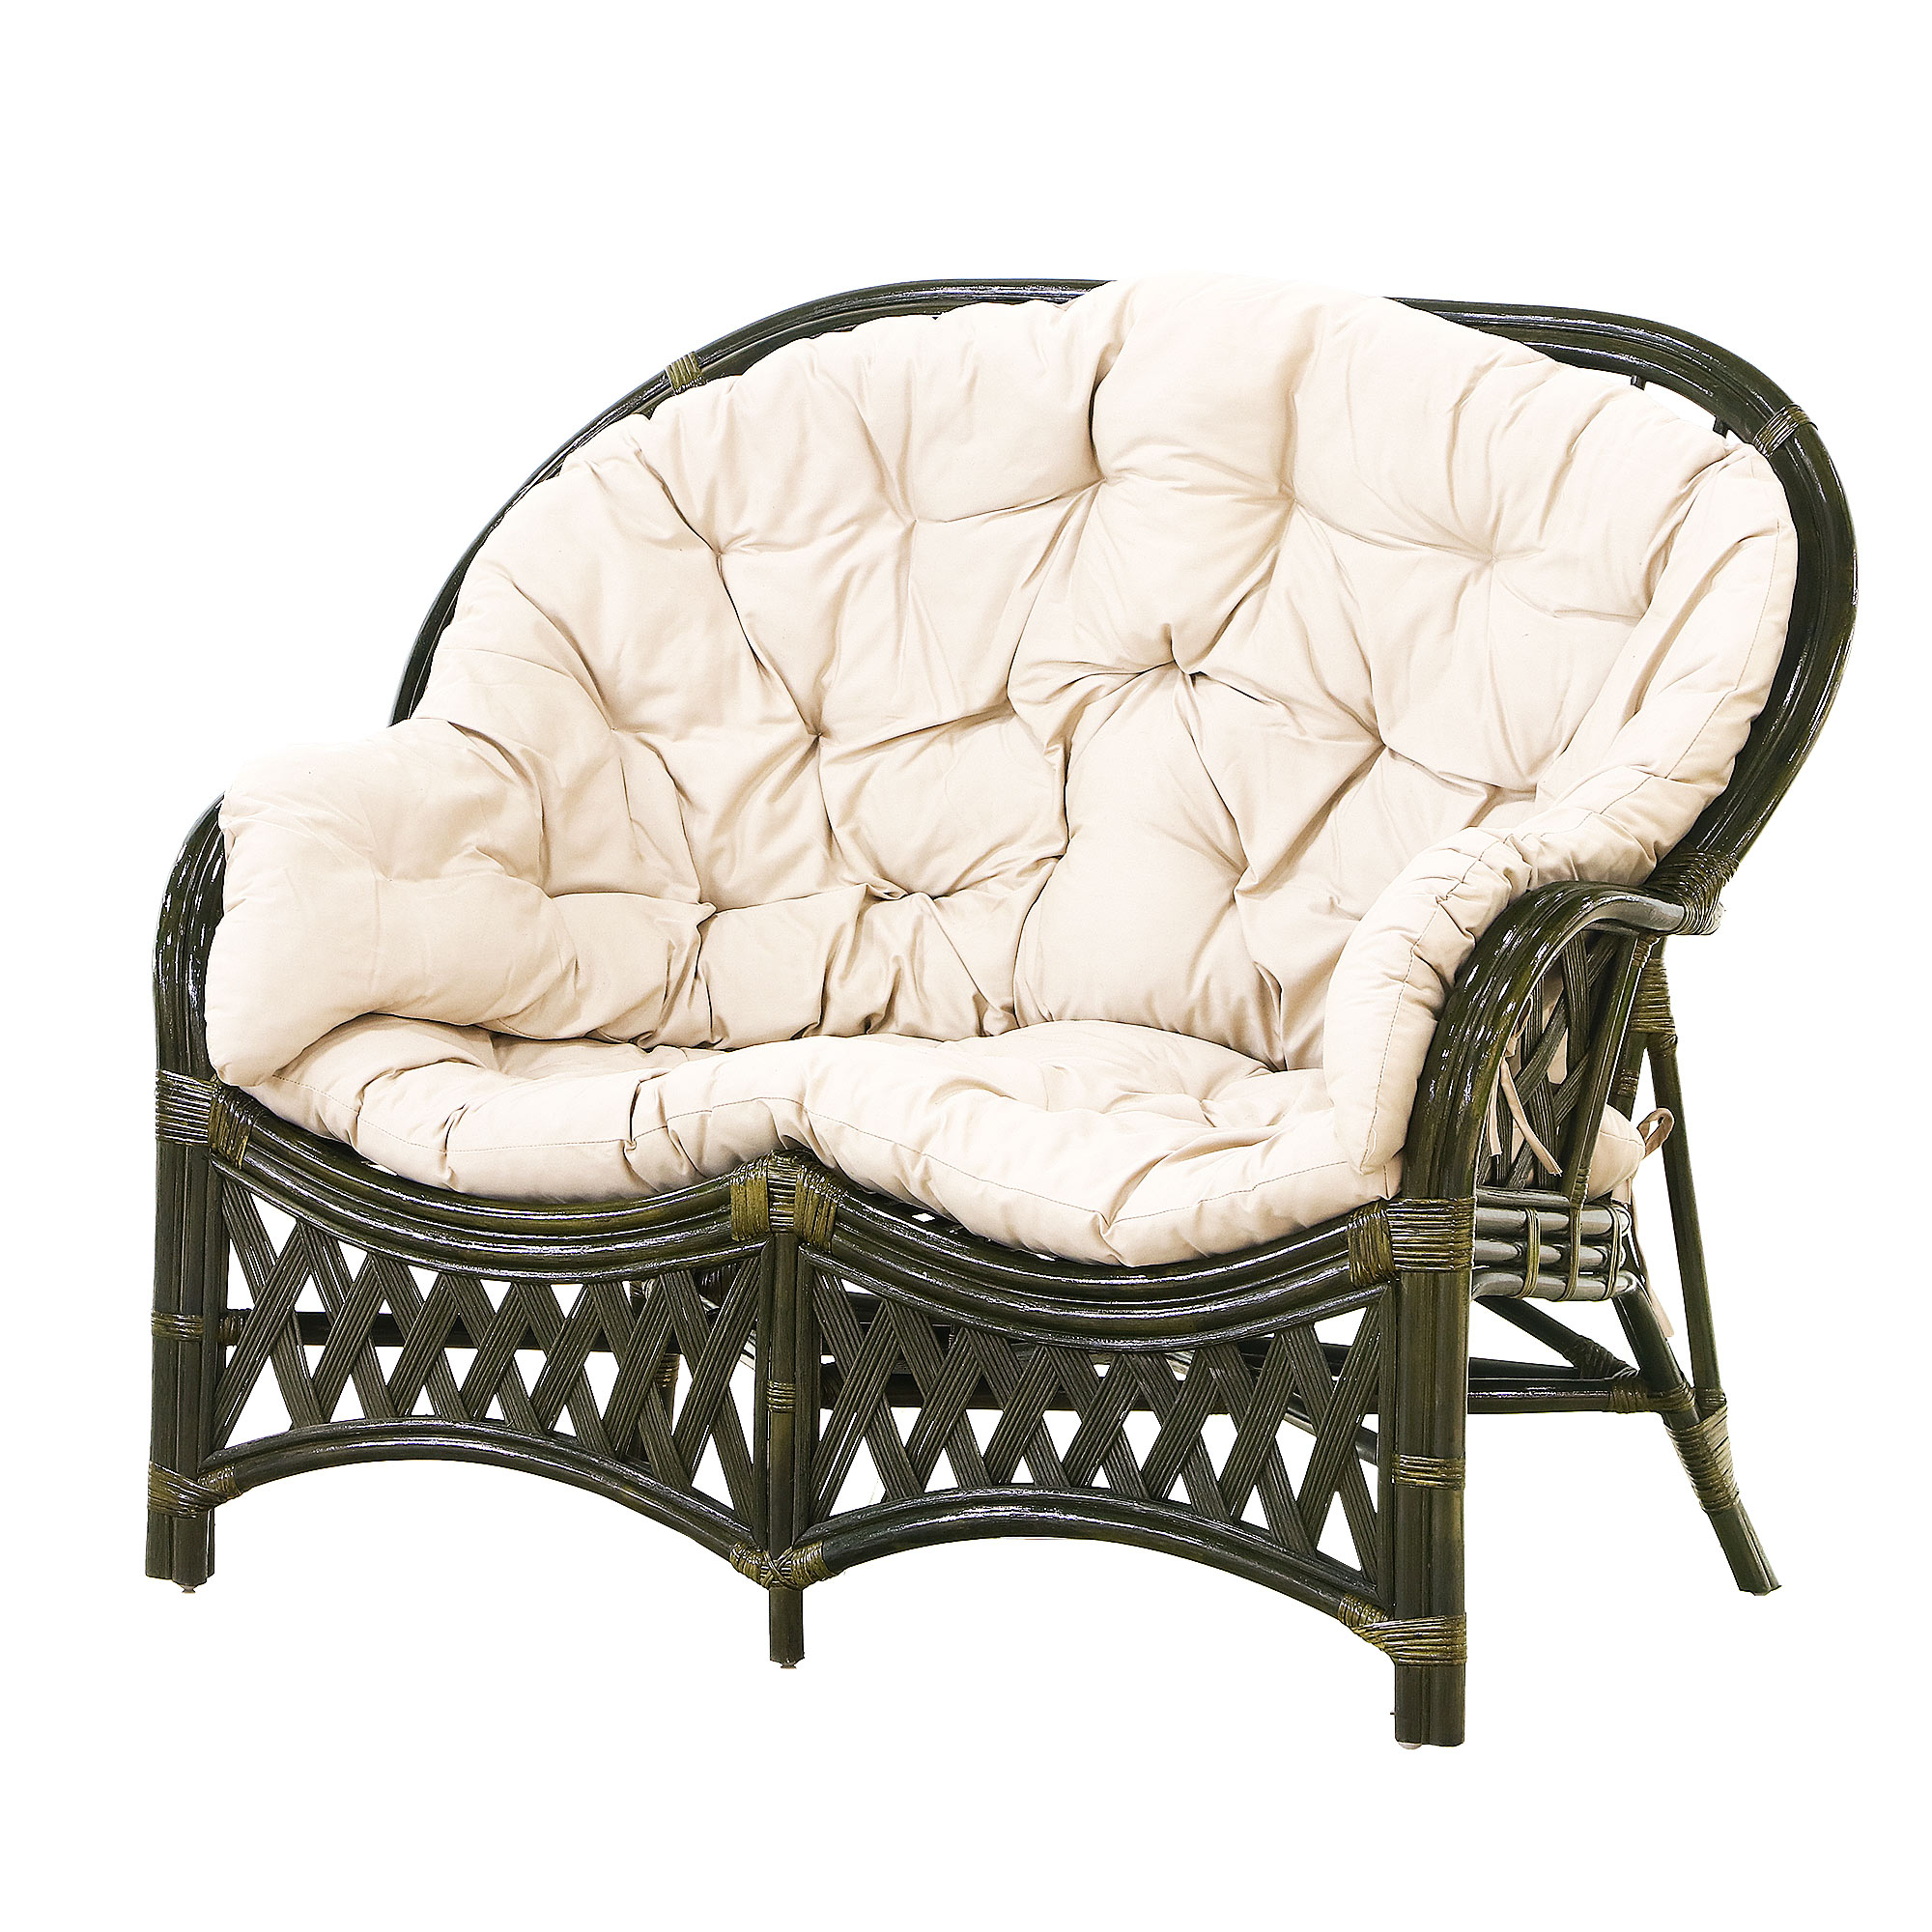 Комплект мебели Rattan grand amalfi olive: диван, стол, 2 кресла, цвет оливковый - фото 3